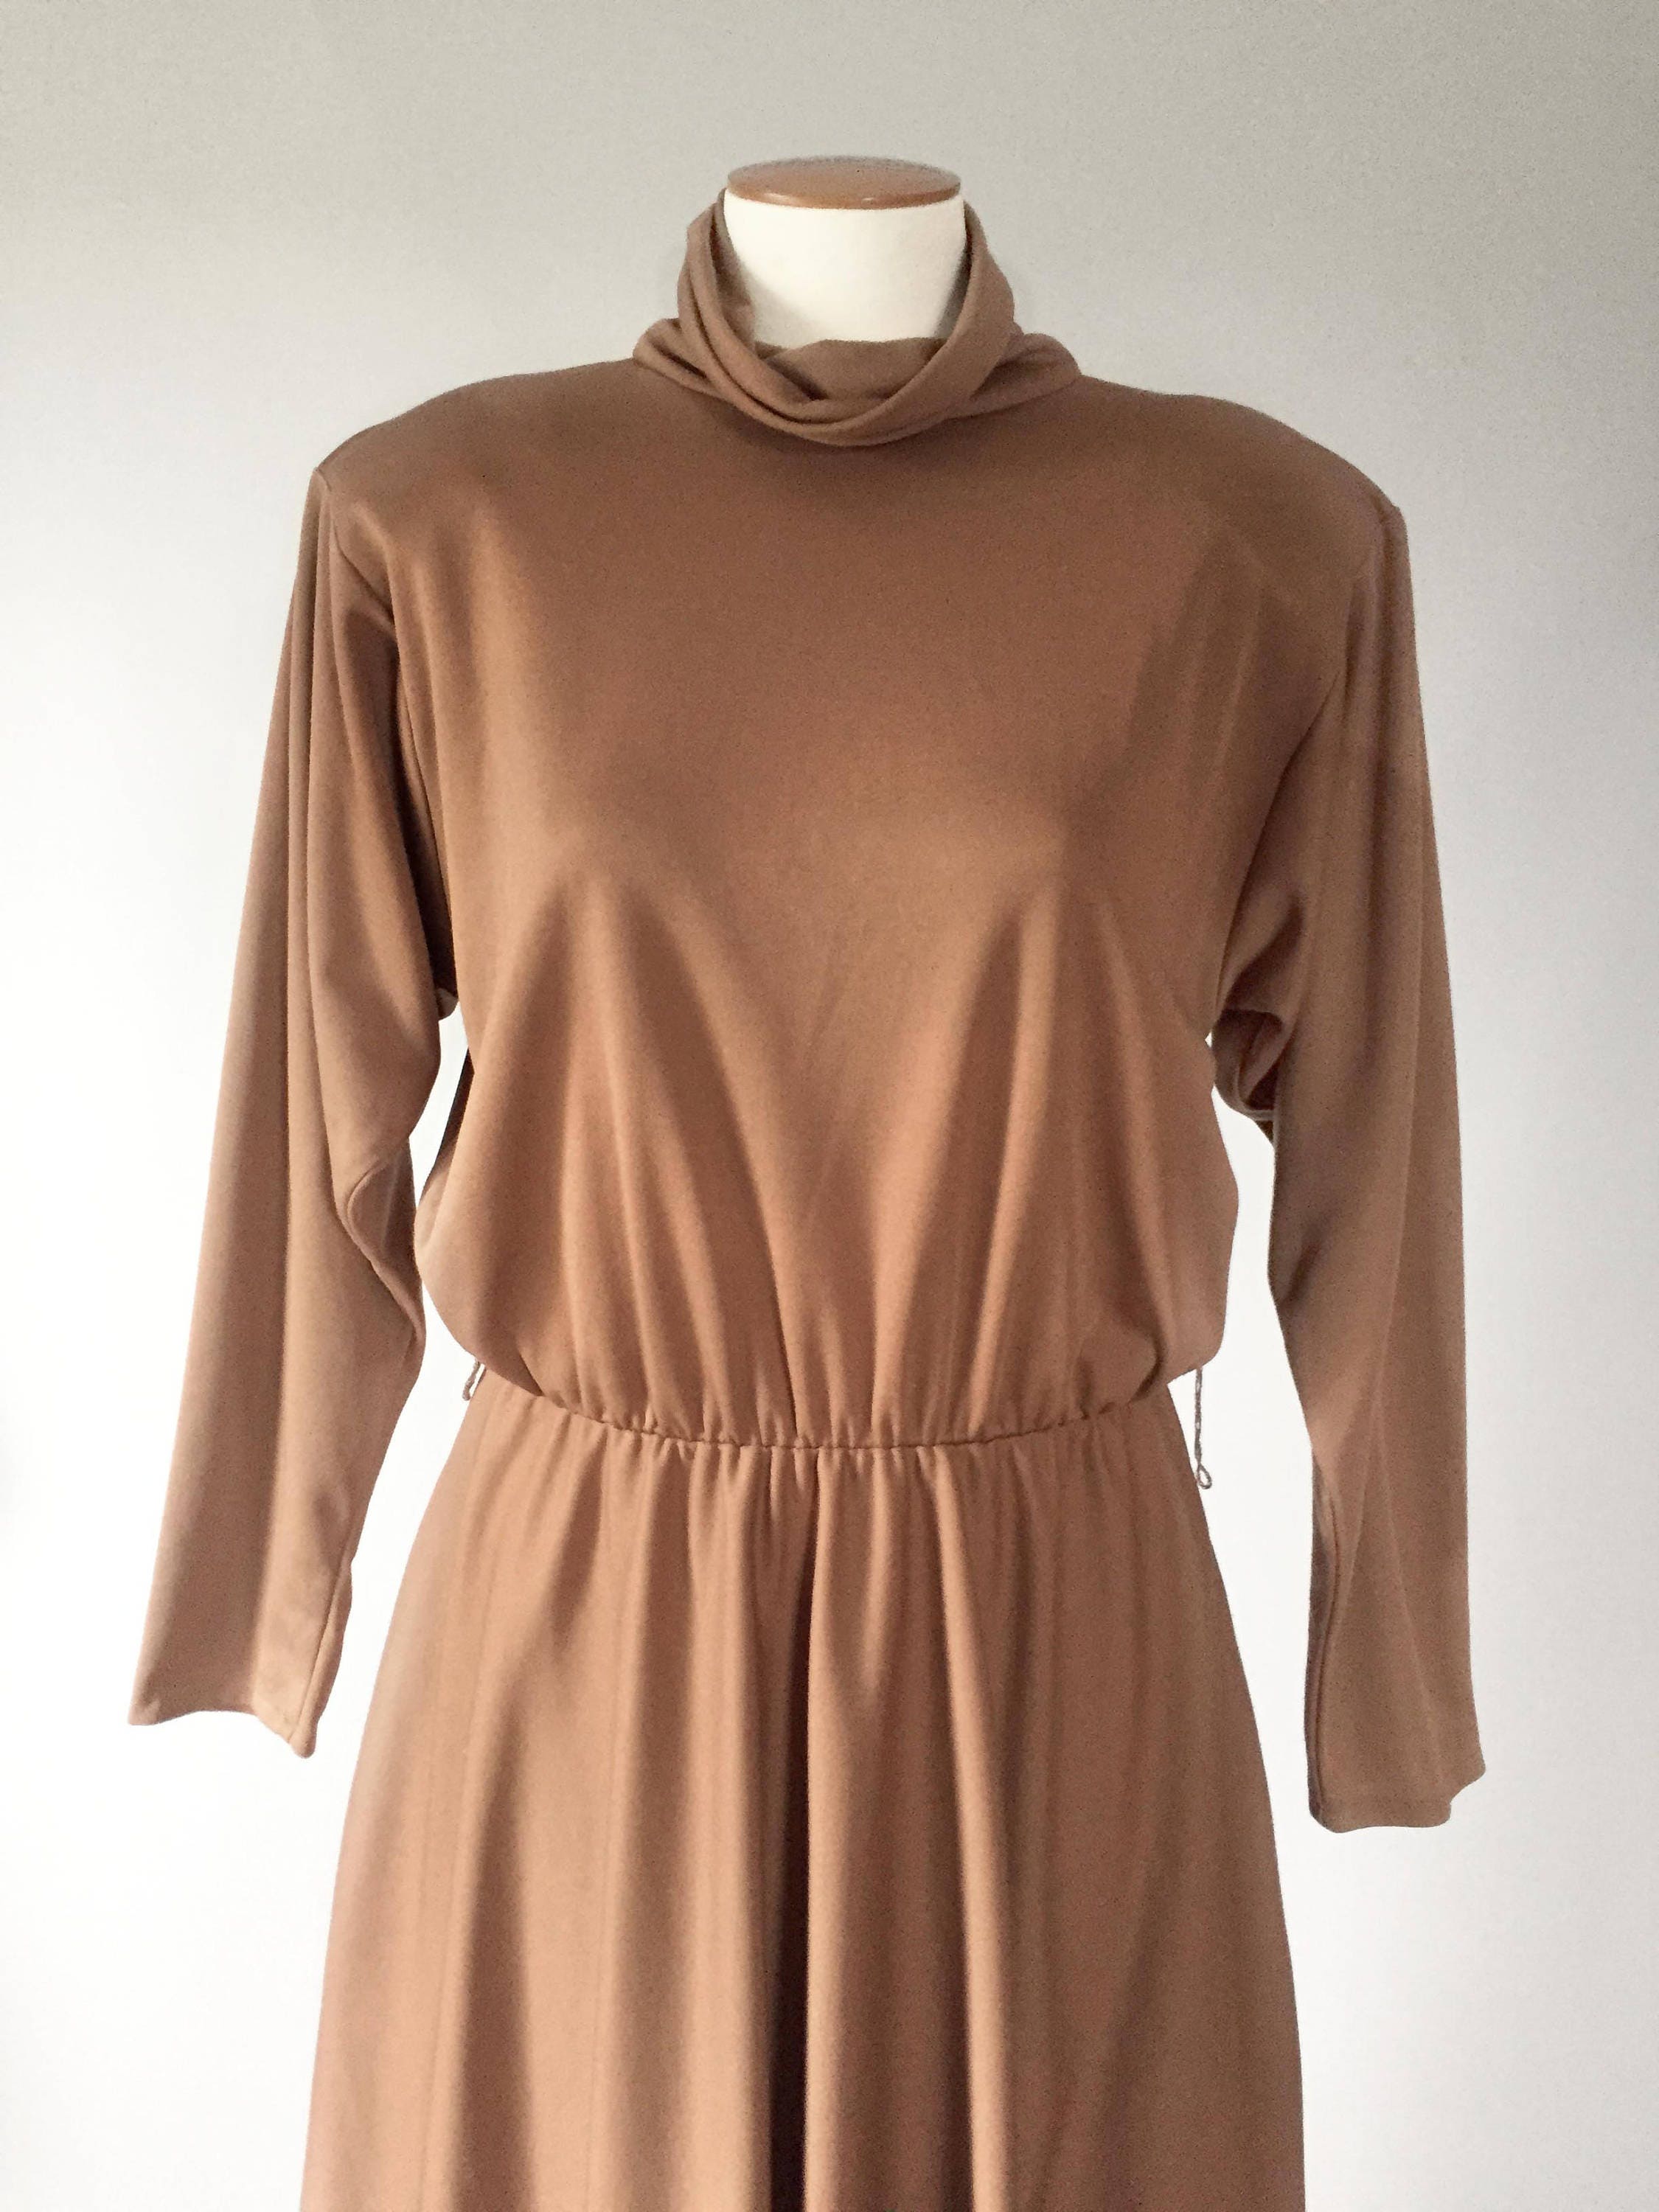 Vintage 1980s 80s brown cowl neck turtleneck fit and flare dress Medium ...